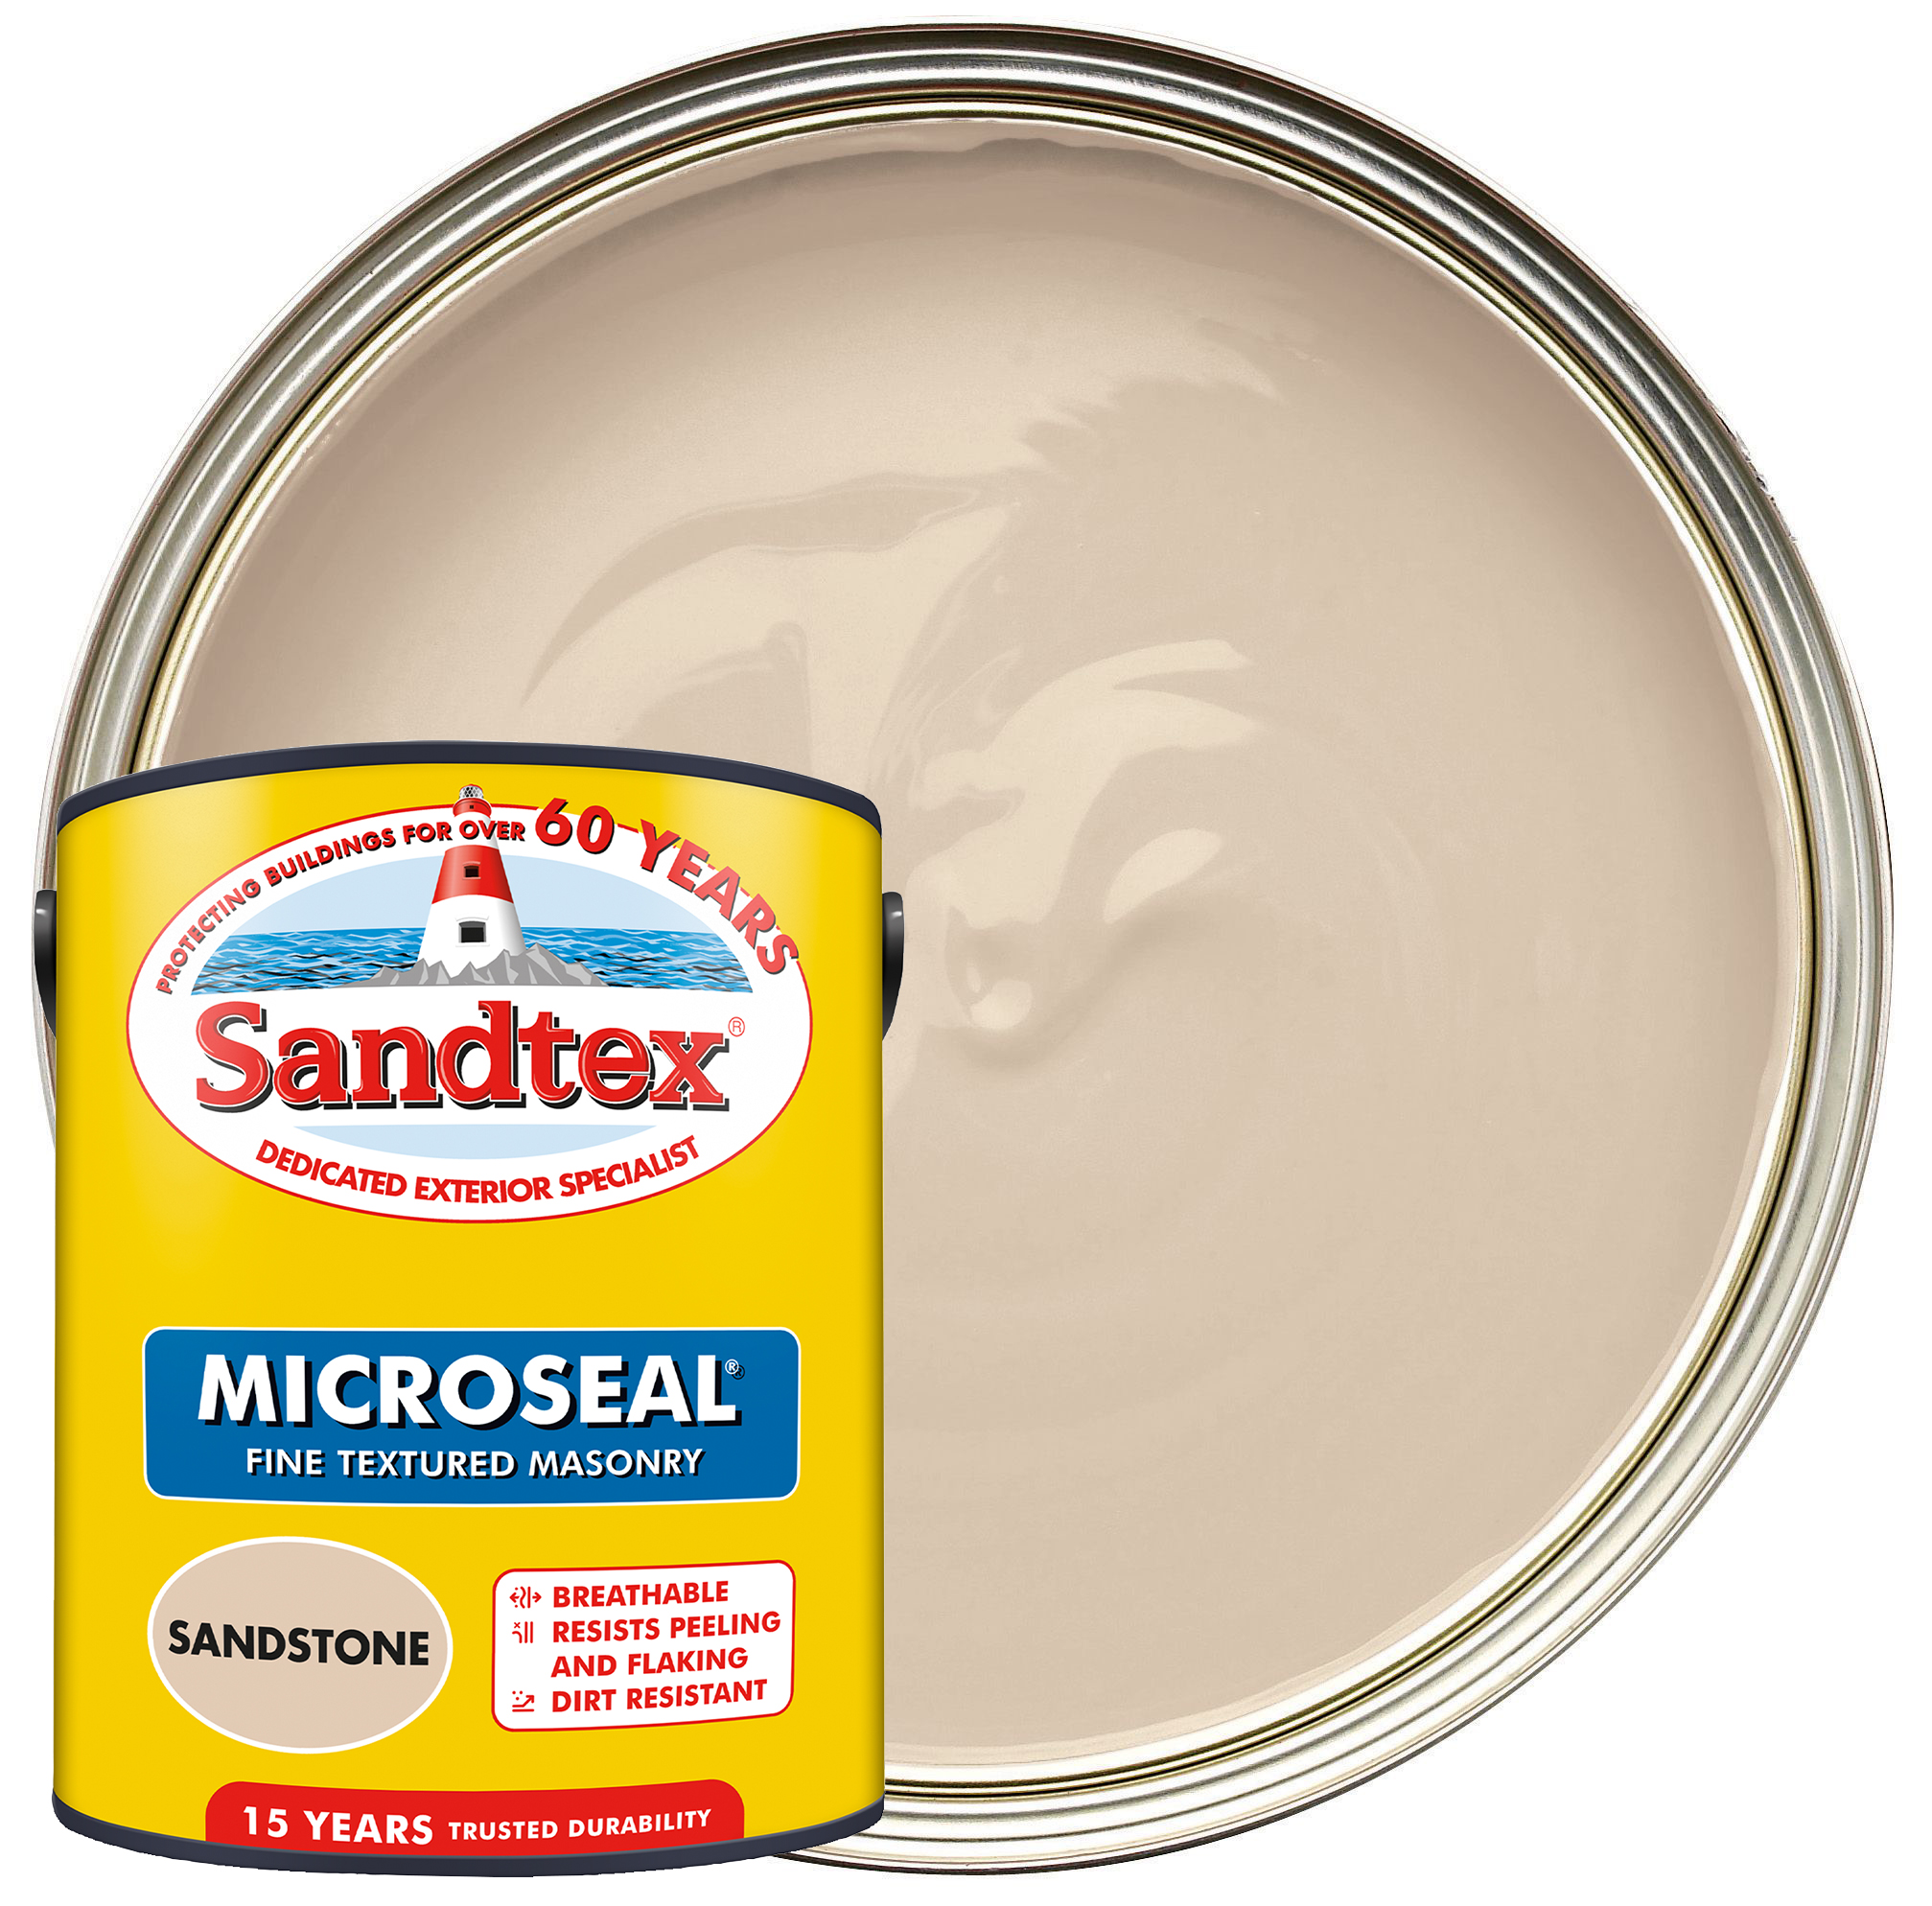 Sandtex Microseal Fine Textured Weatherproof Masonry 15 Year Exterior Wall Paint - Sandstone - 5L